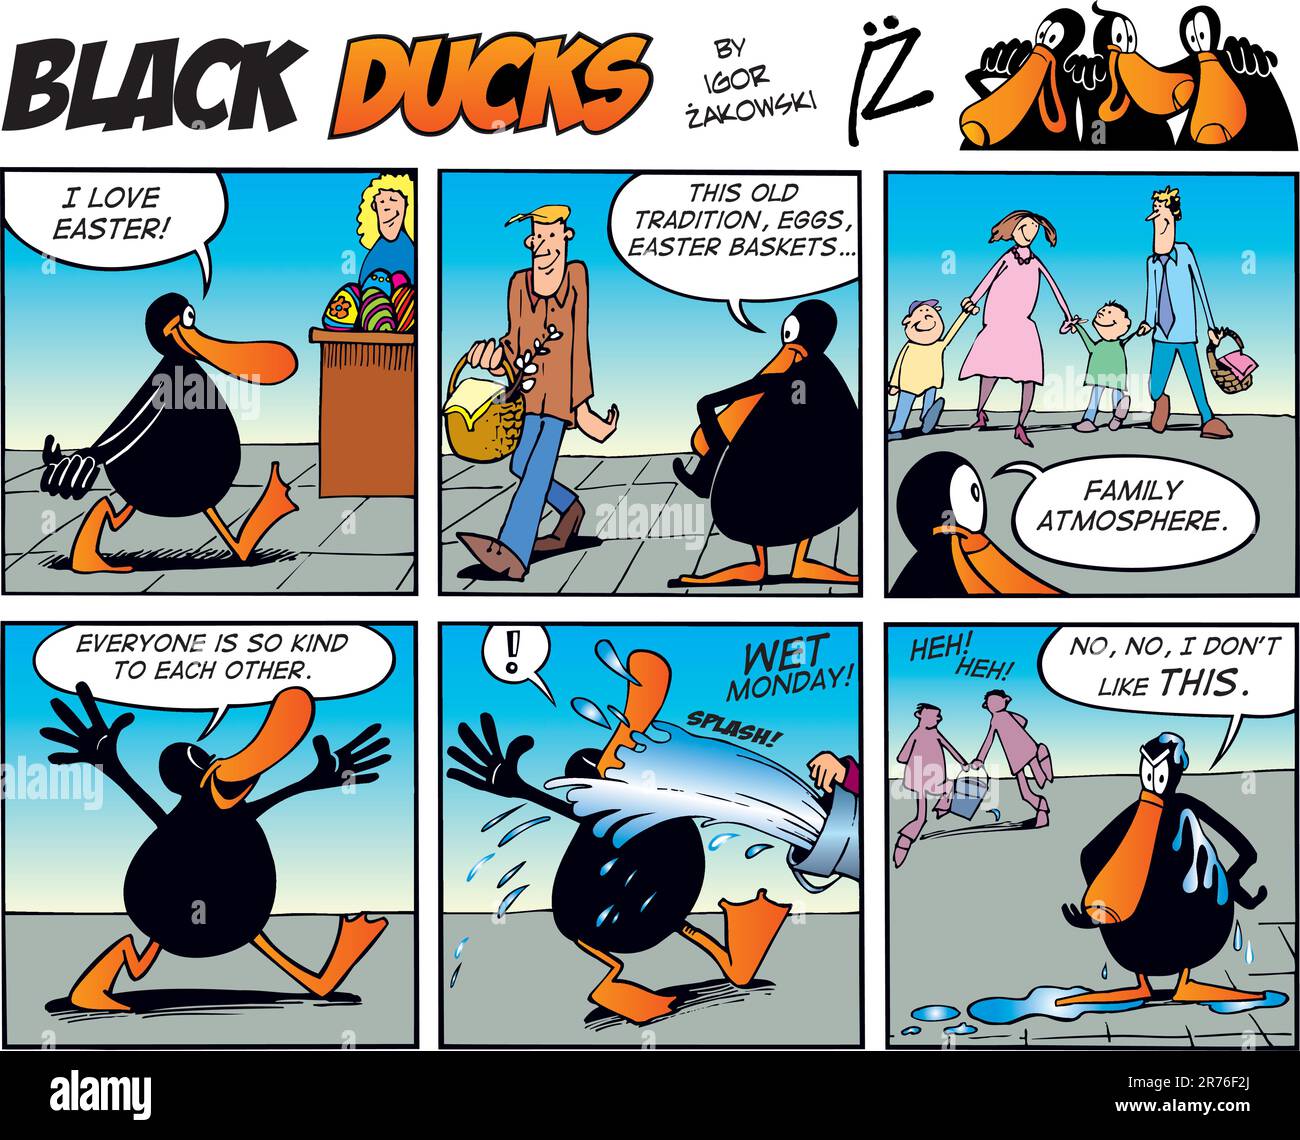 Black Ducks Comic Strip episode 41 Stock Vector